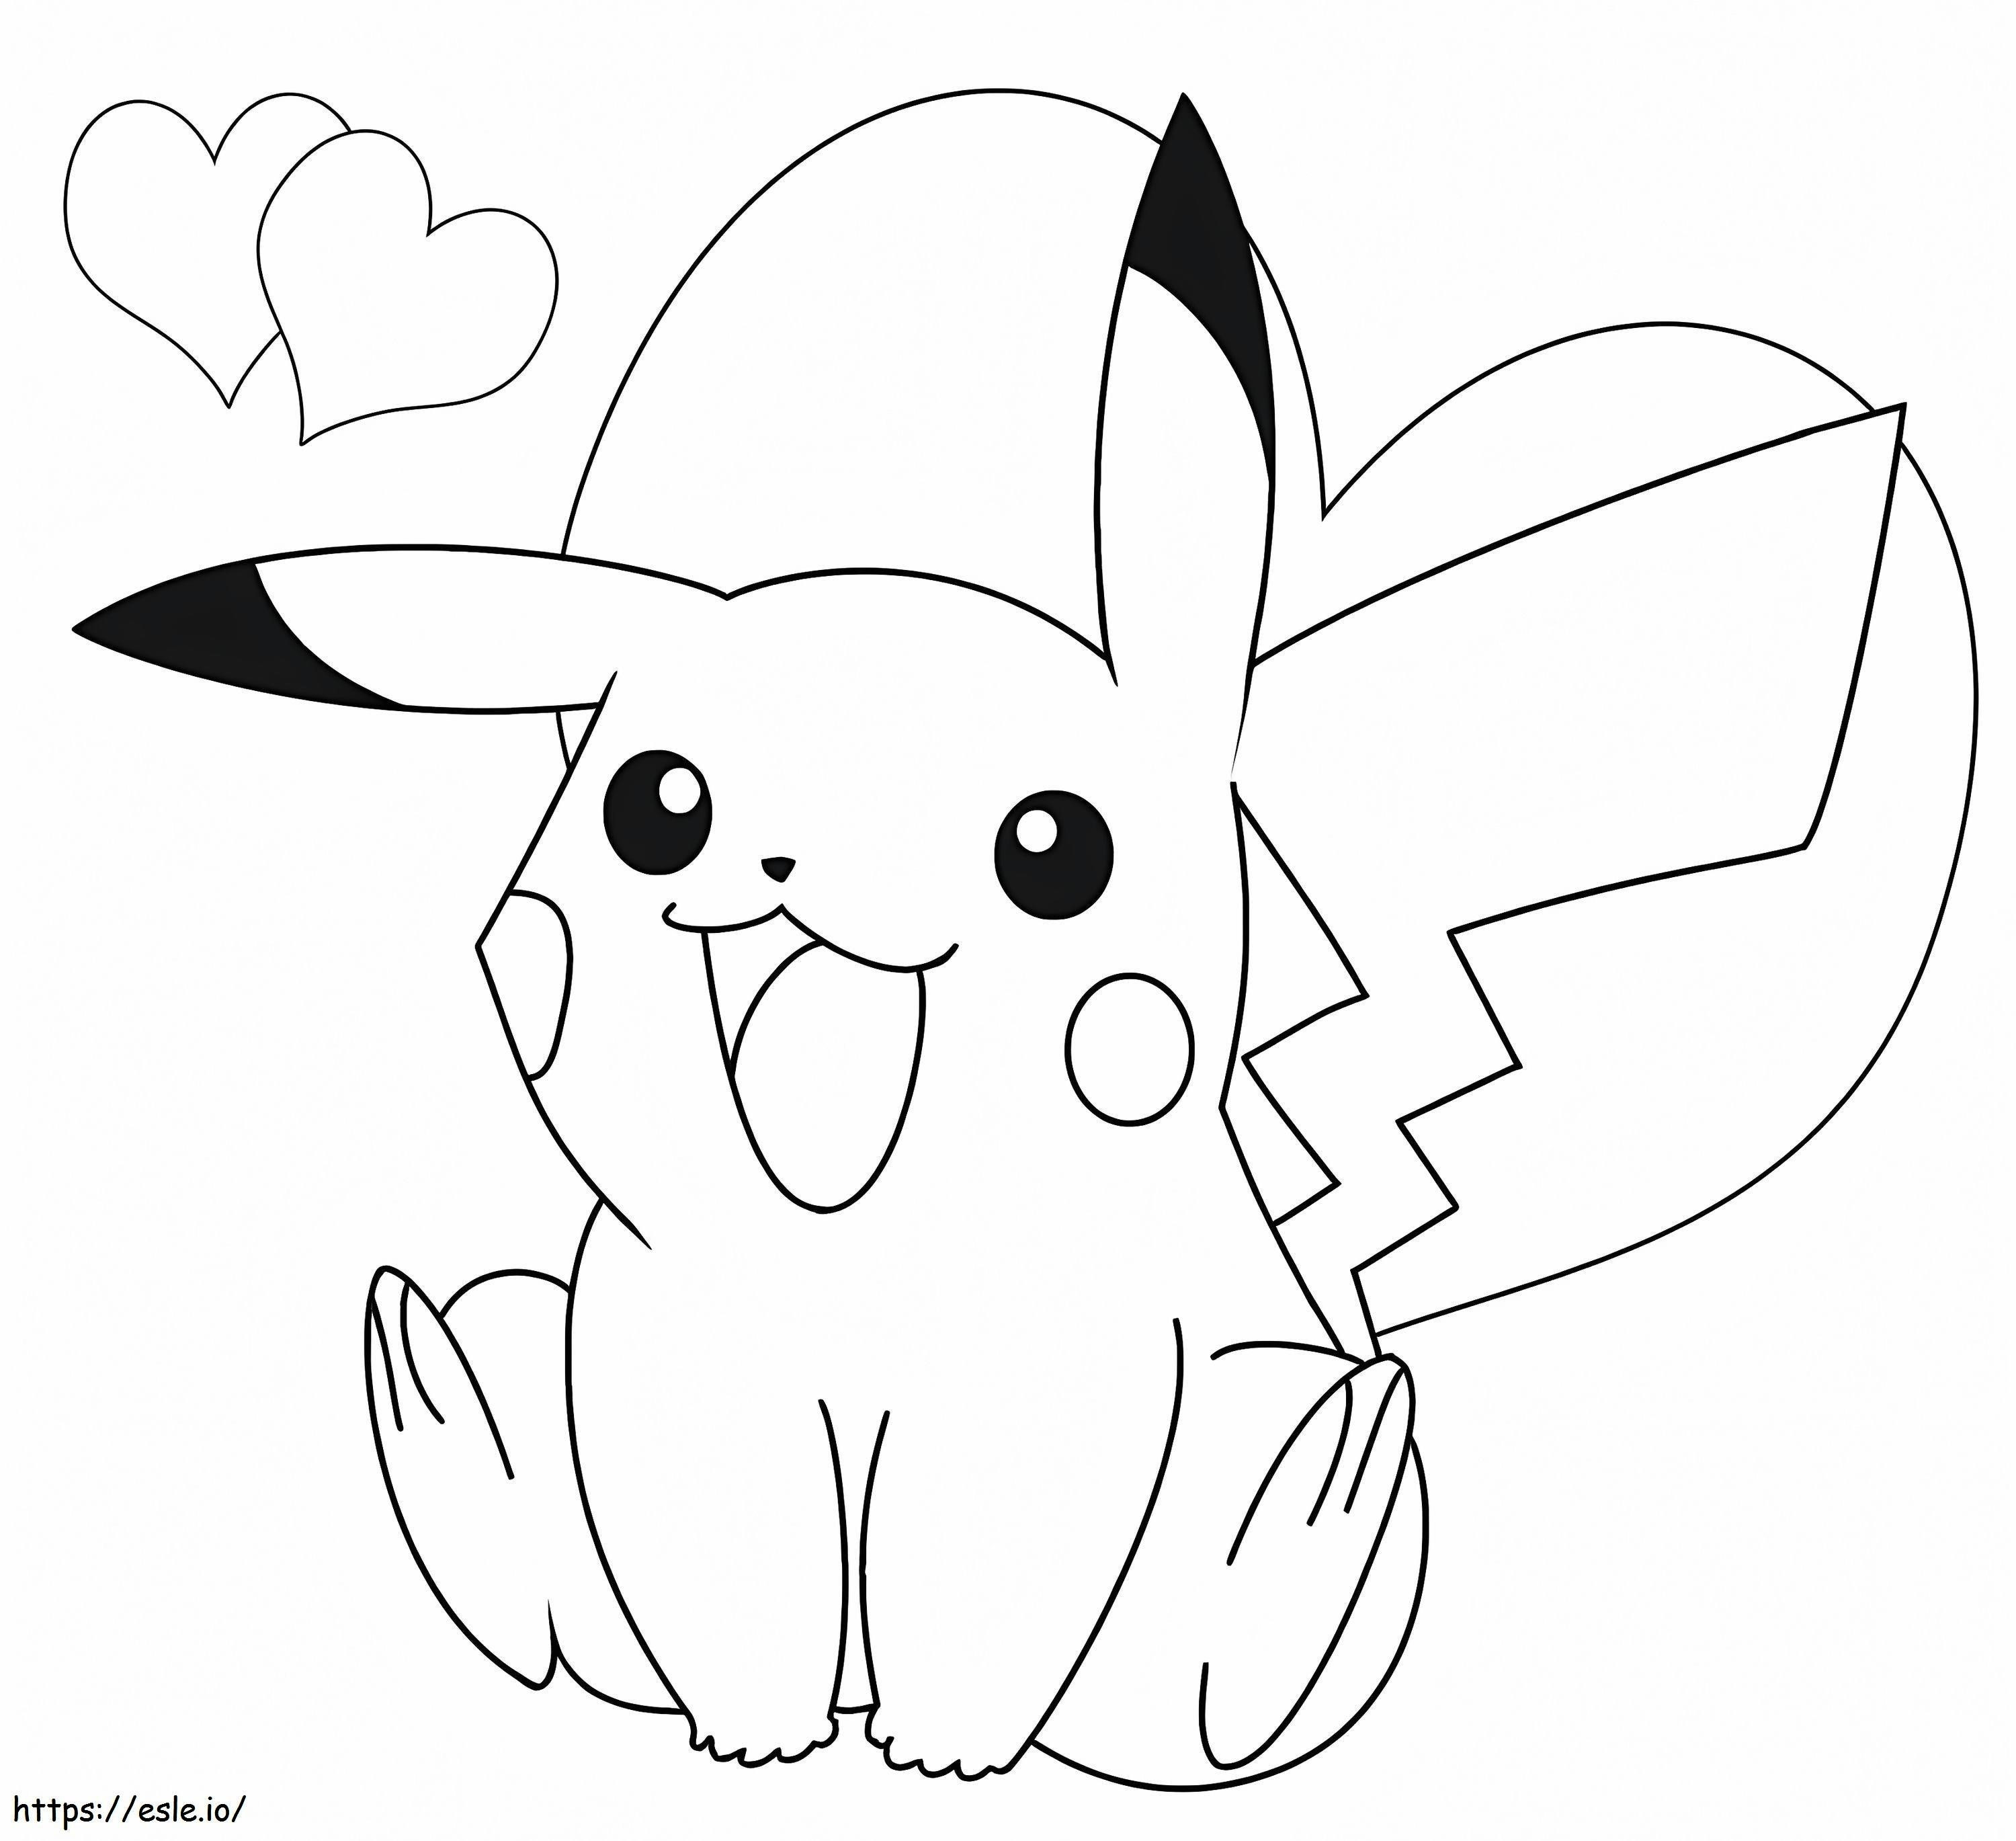 Adorável Pikachu para colorir